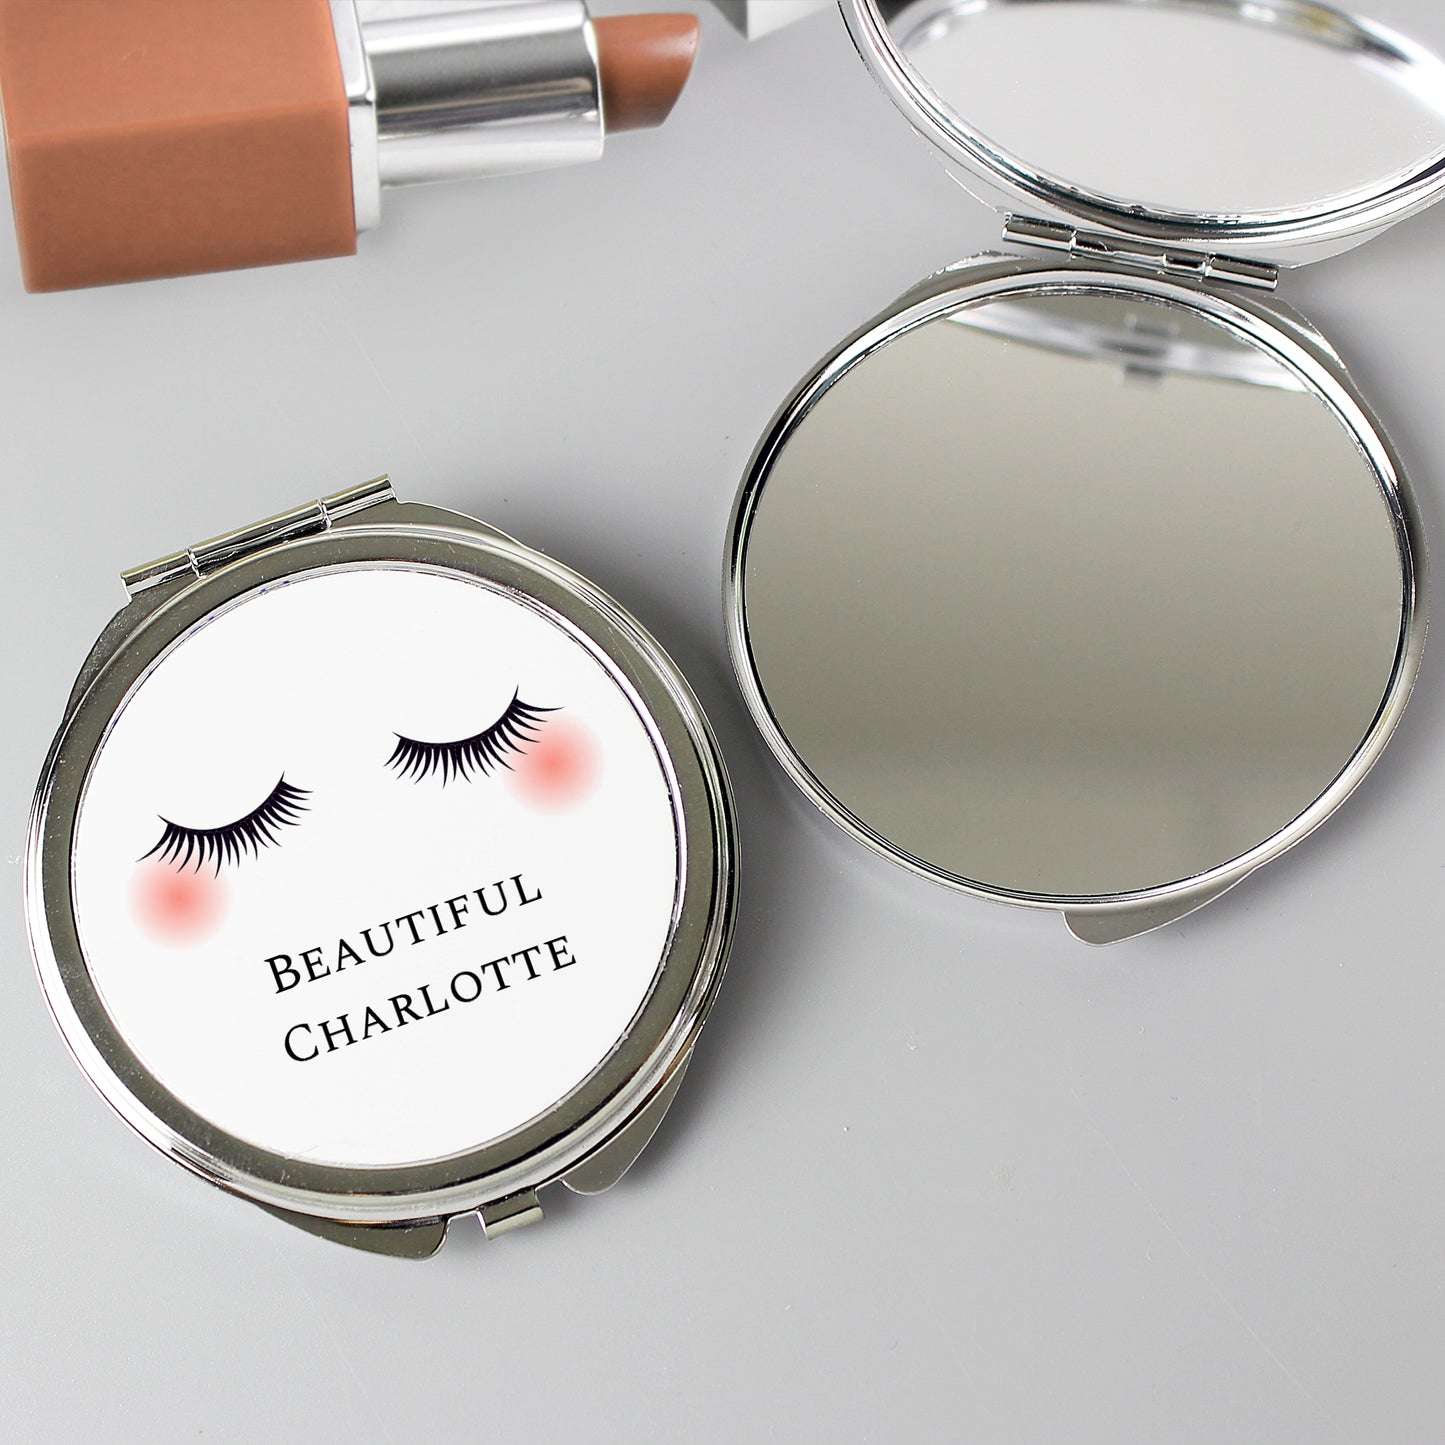 Personalised Eyelashes Compact Mirror - Personalise It!